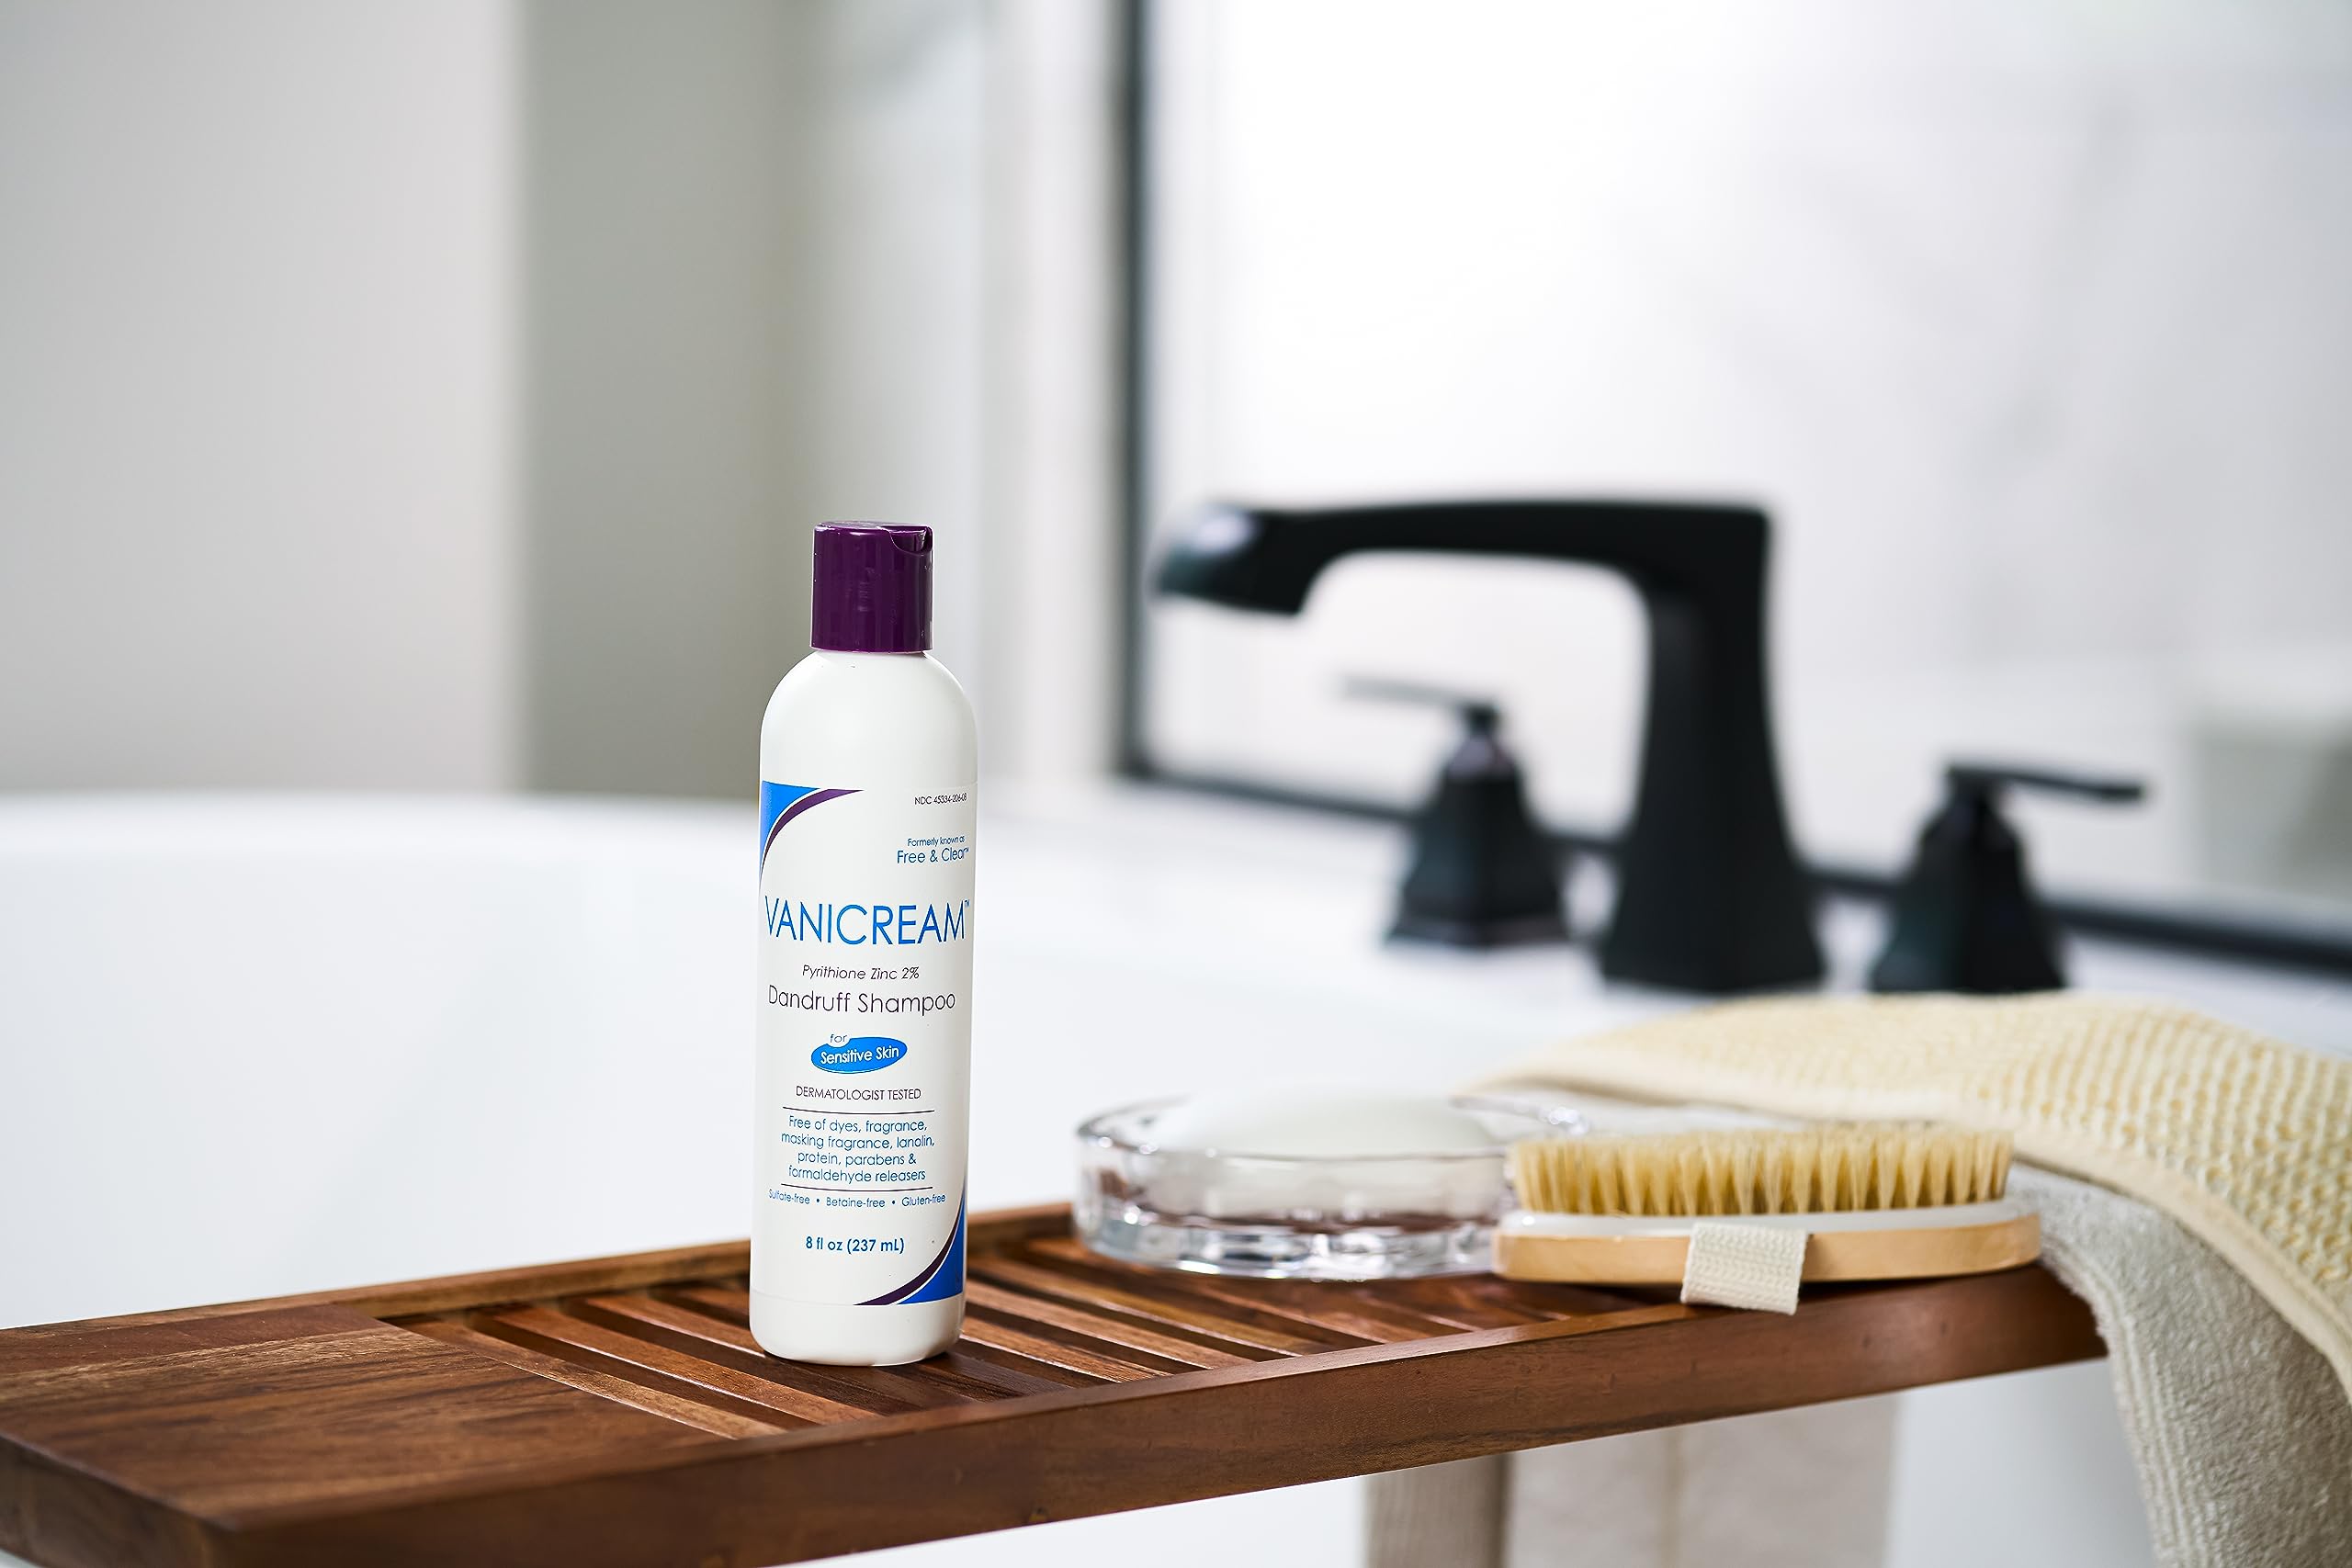 Vanicream Dandruff Shampoo – pH Balanced Mild Formula Effective For All Hair Types and Sensitive Scalps - Free of Fragrance, Lanolin, and Parabens – 8 Fl Oz